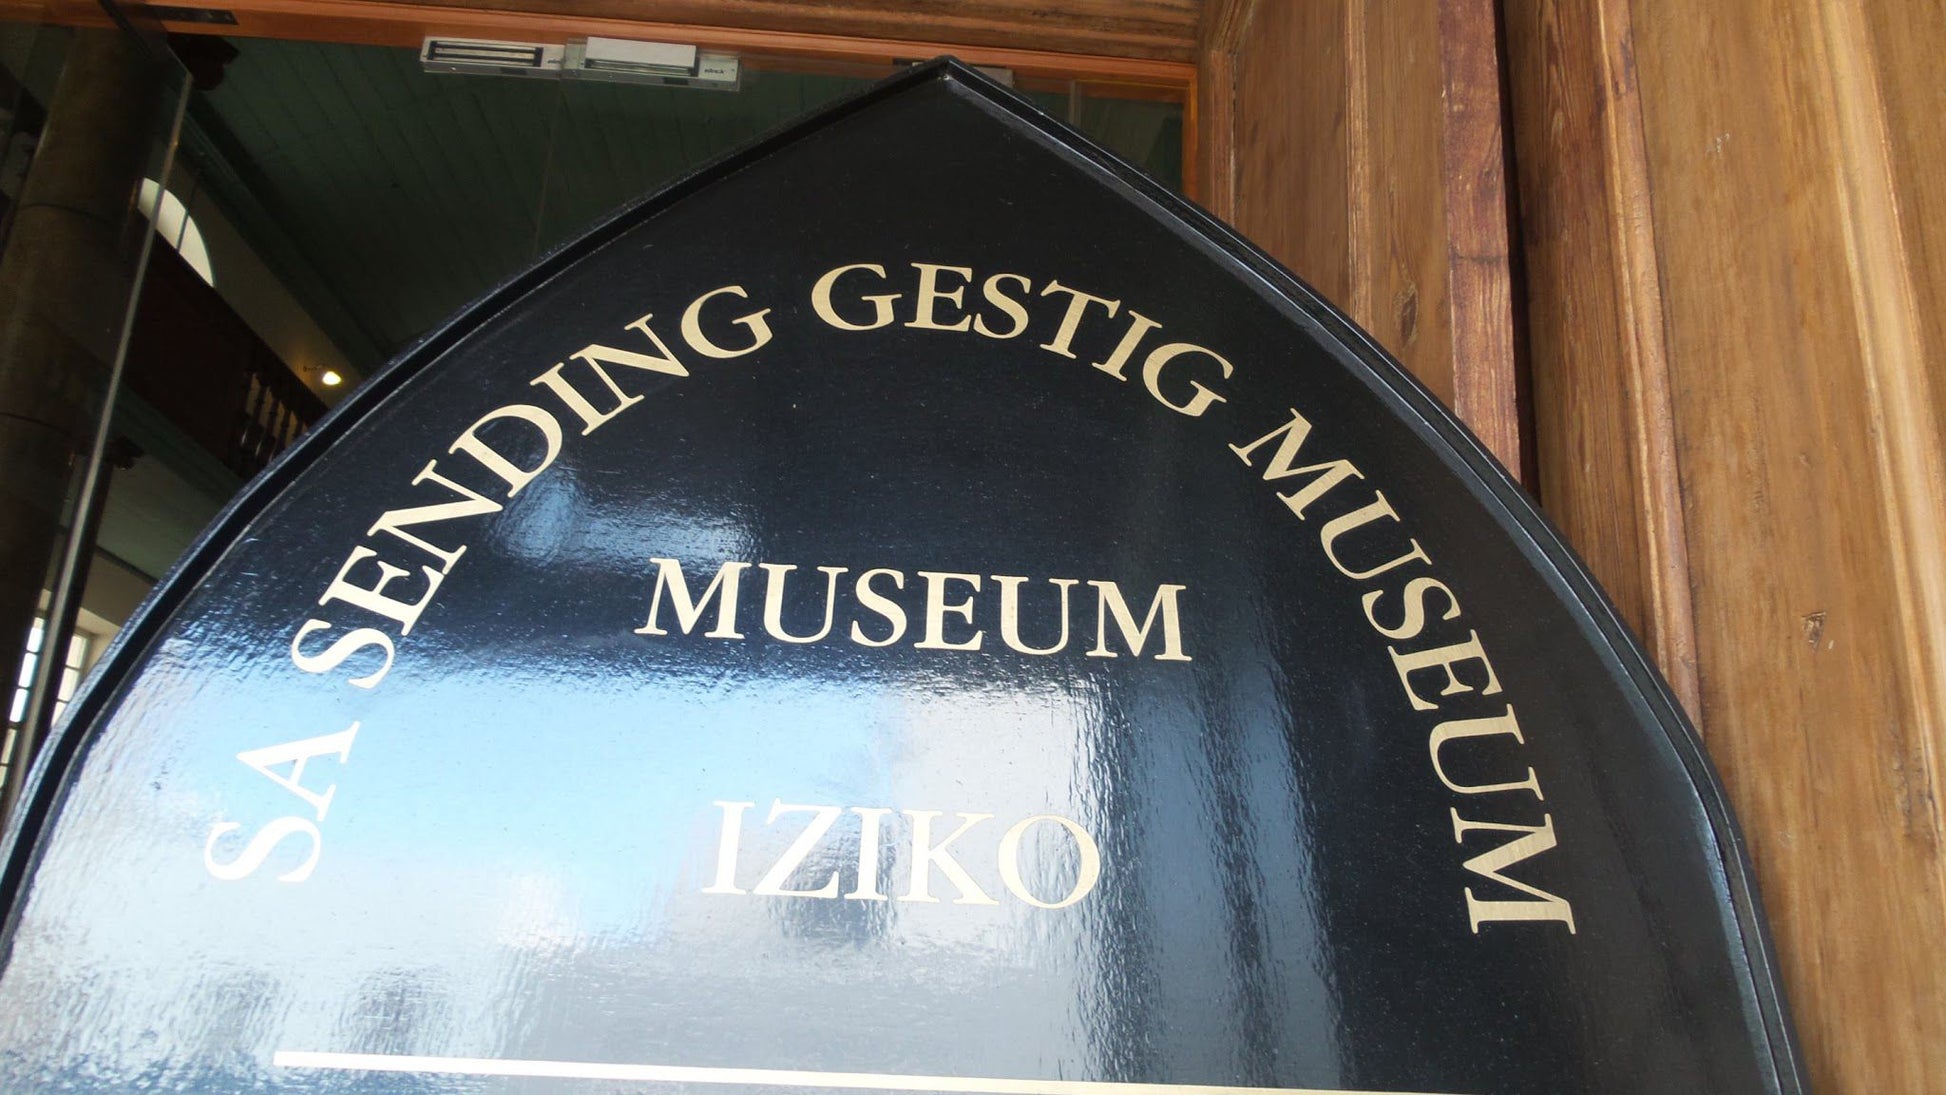  South African Sendinggestig Museum